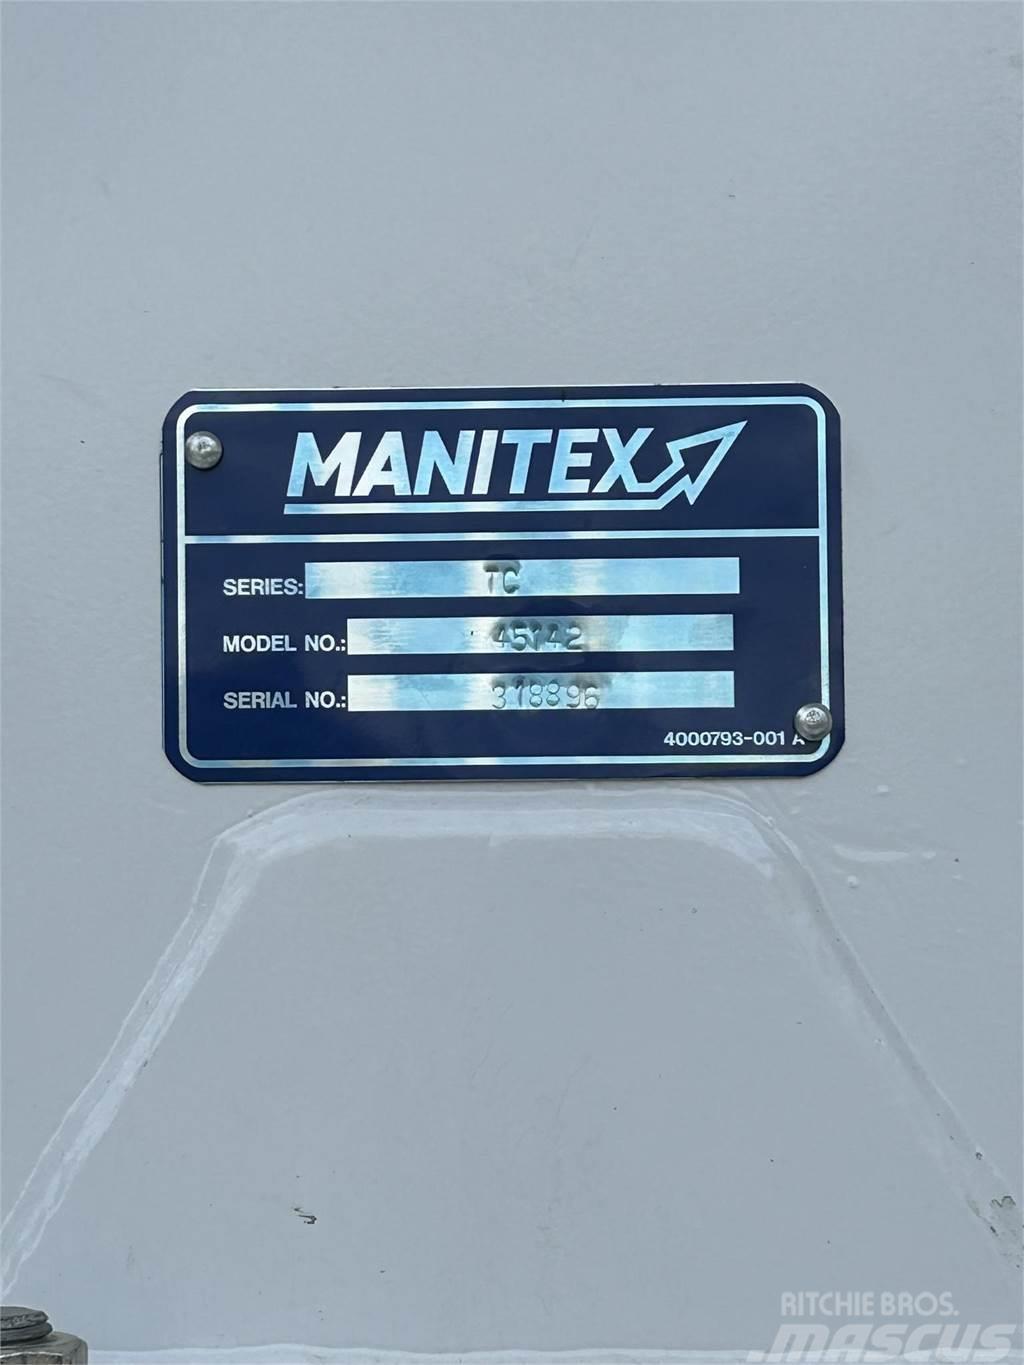 Manitex TC45142 Truck mounted cranes